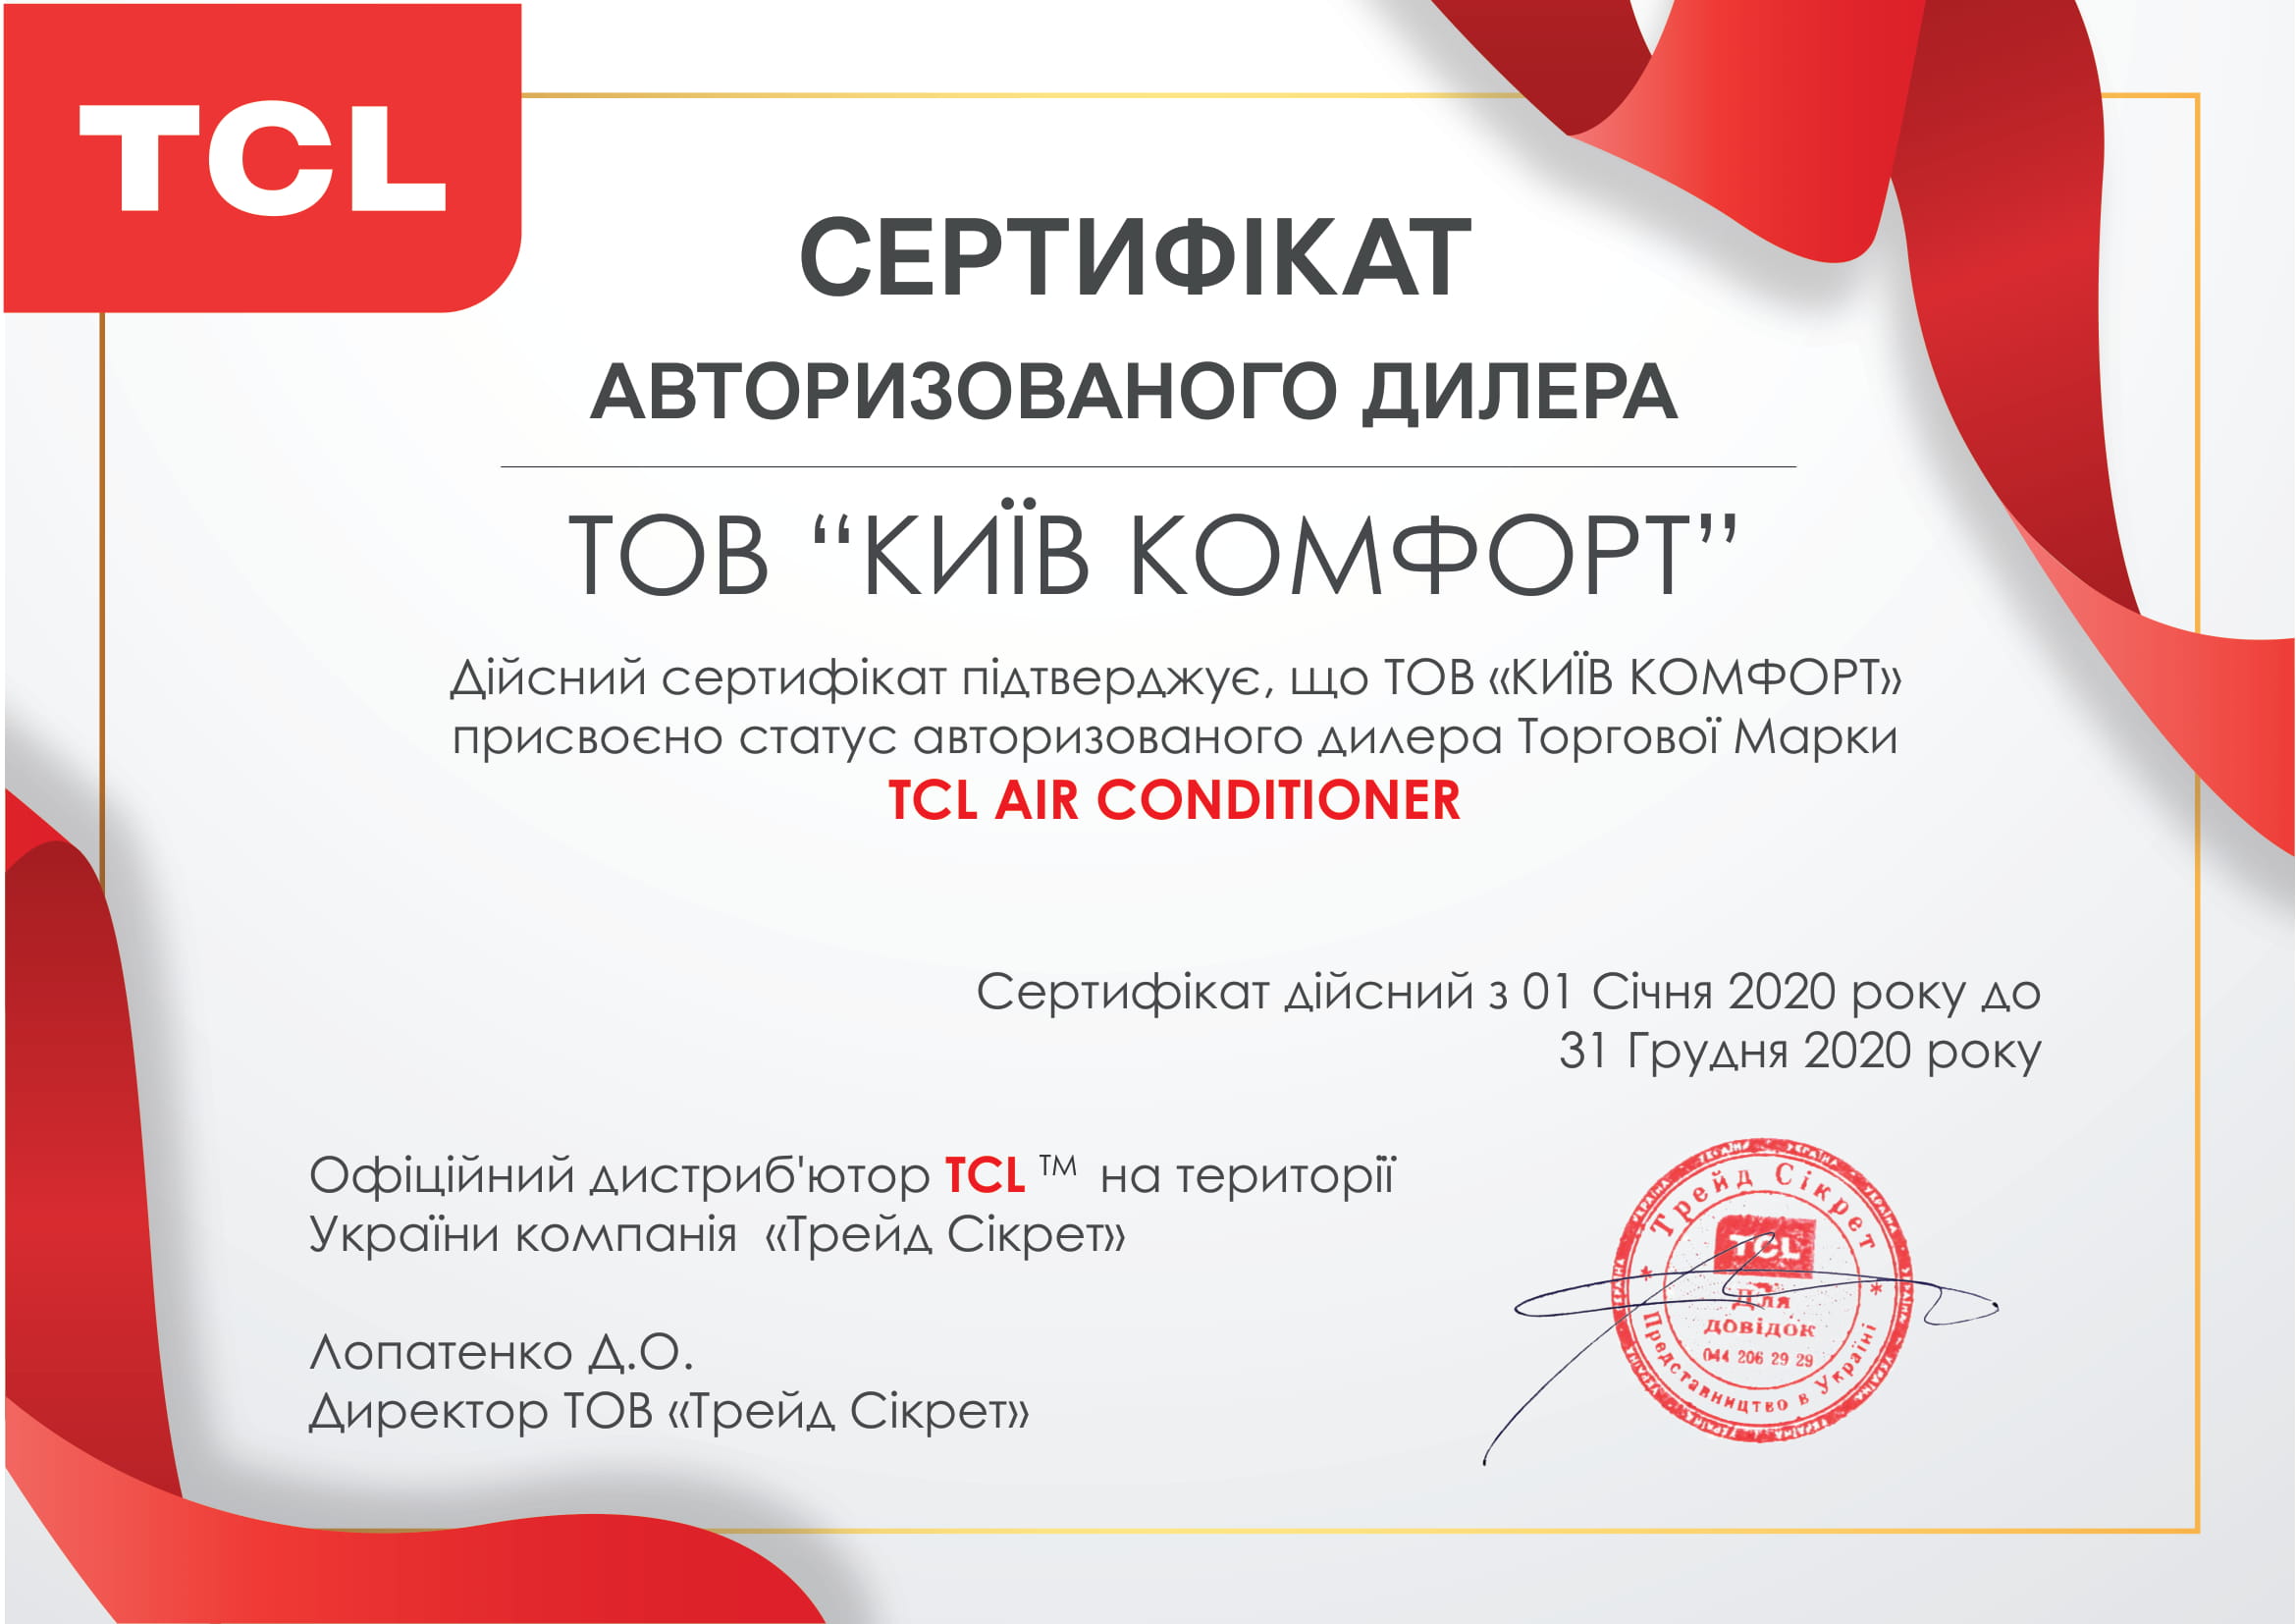 Сертификат TCL 2020